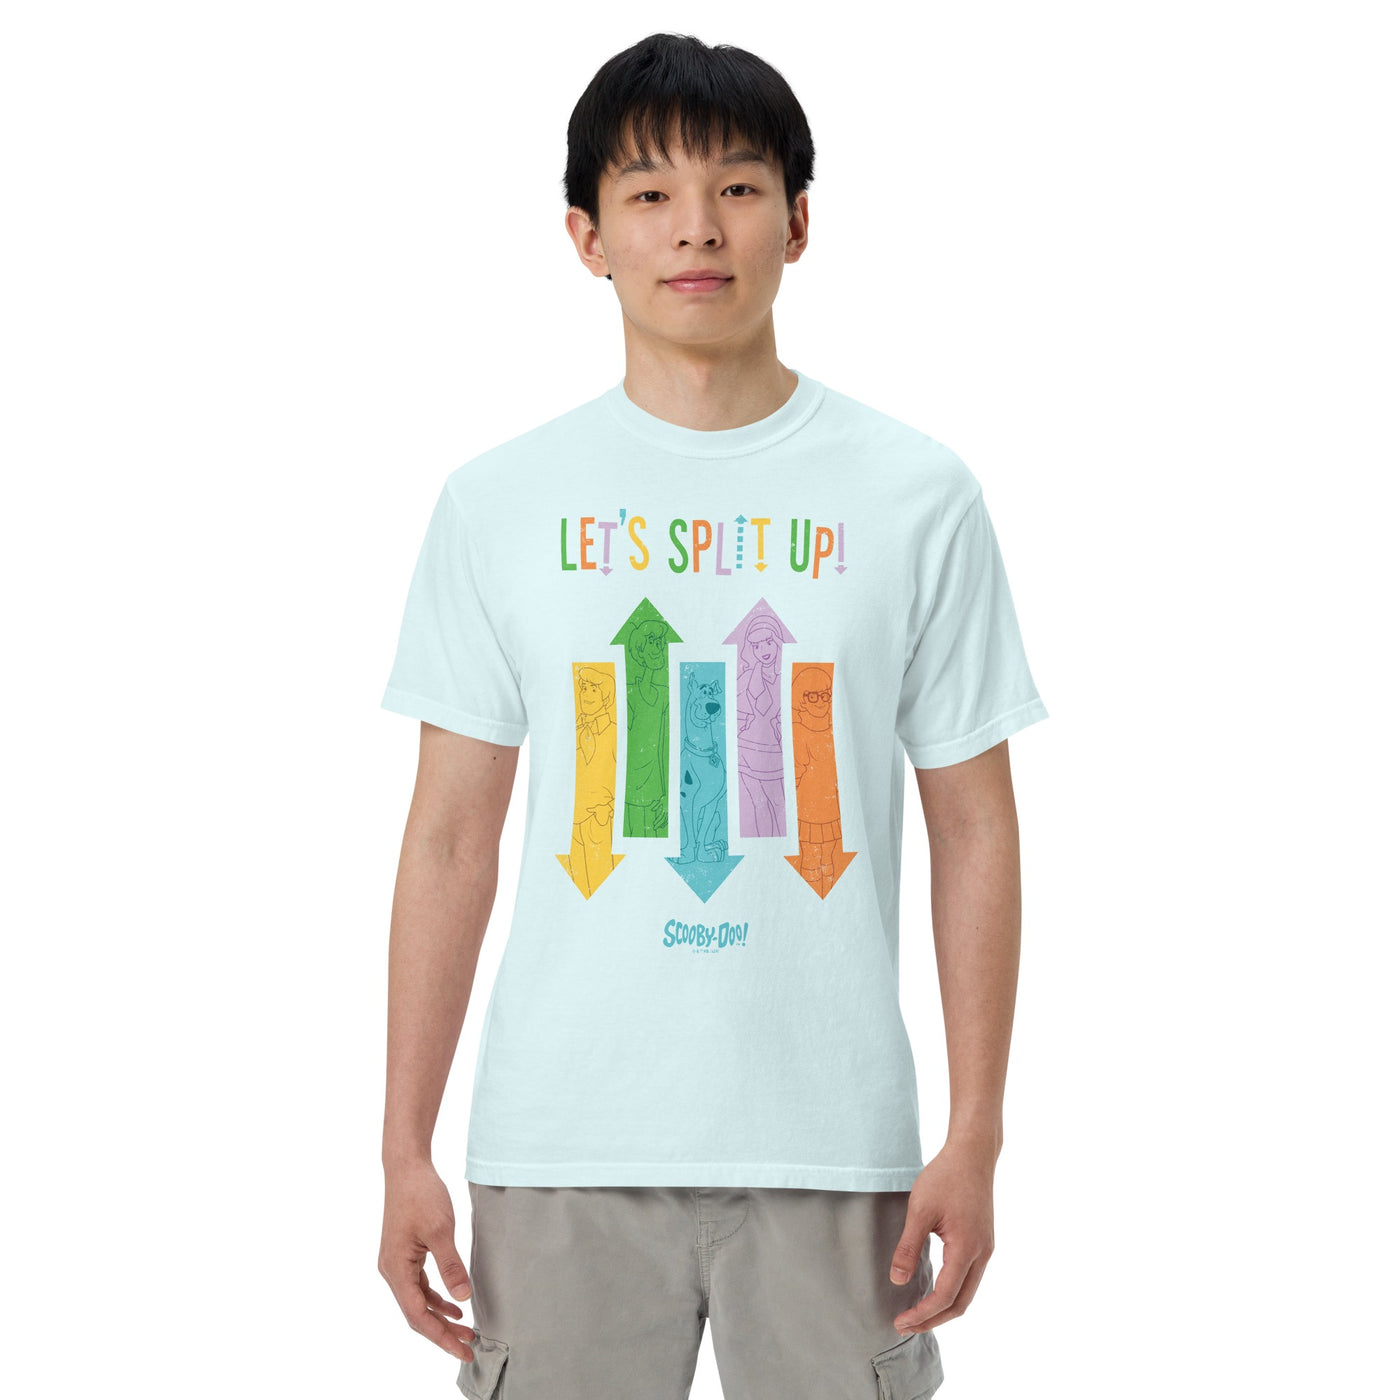 Scooby-Doo! Let’s Split Up! Comfort Colors T-shirt